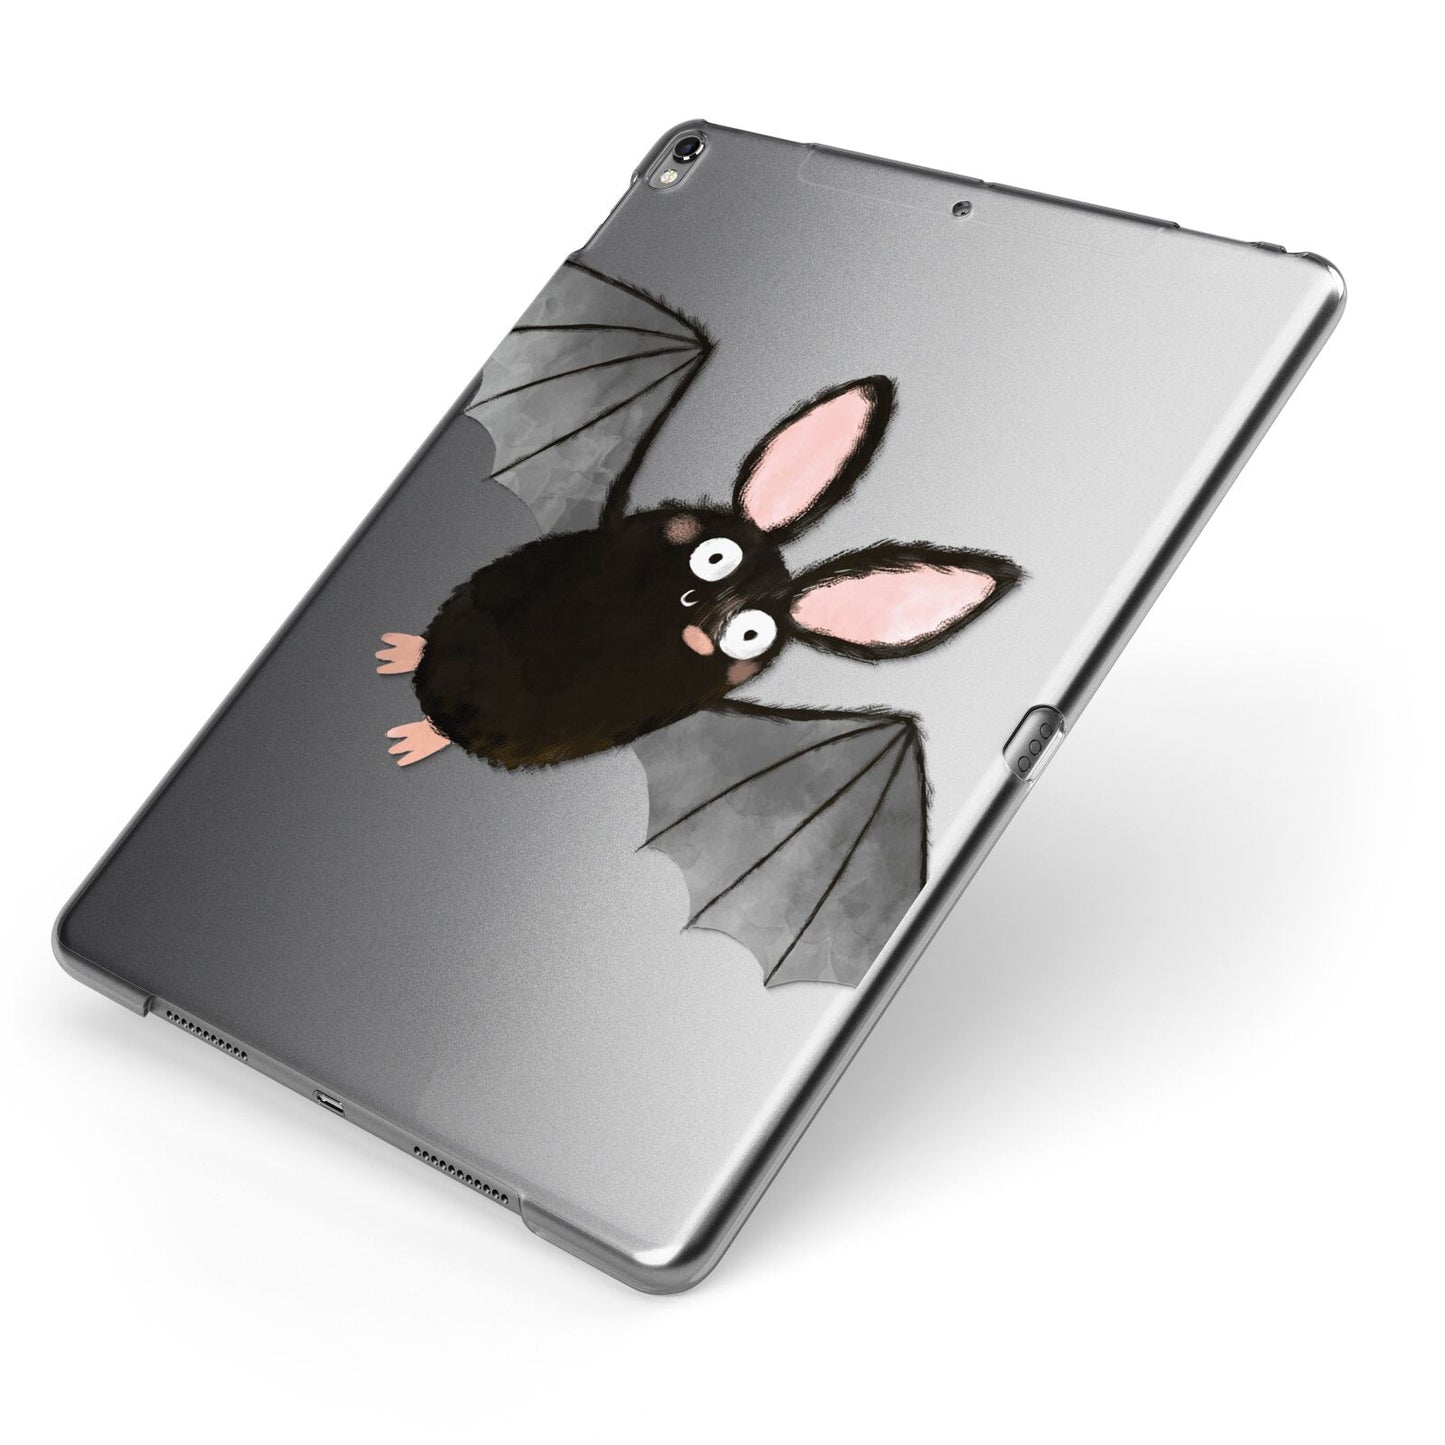 Bat Illustration Apple iPad Case on Grey iPad Side View